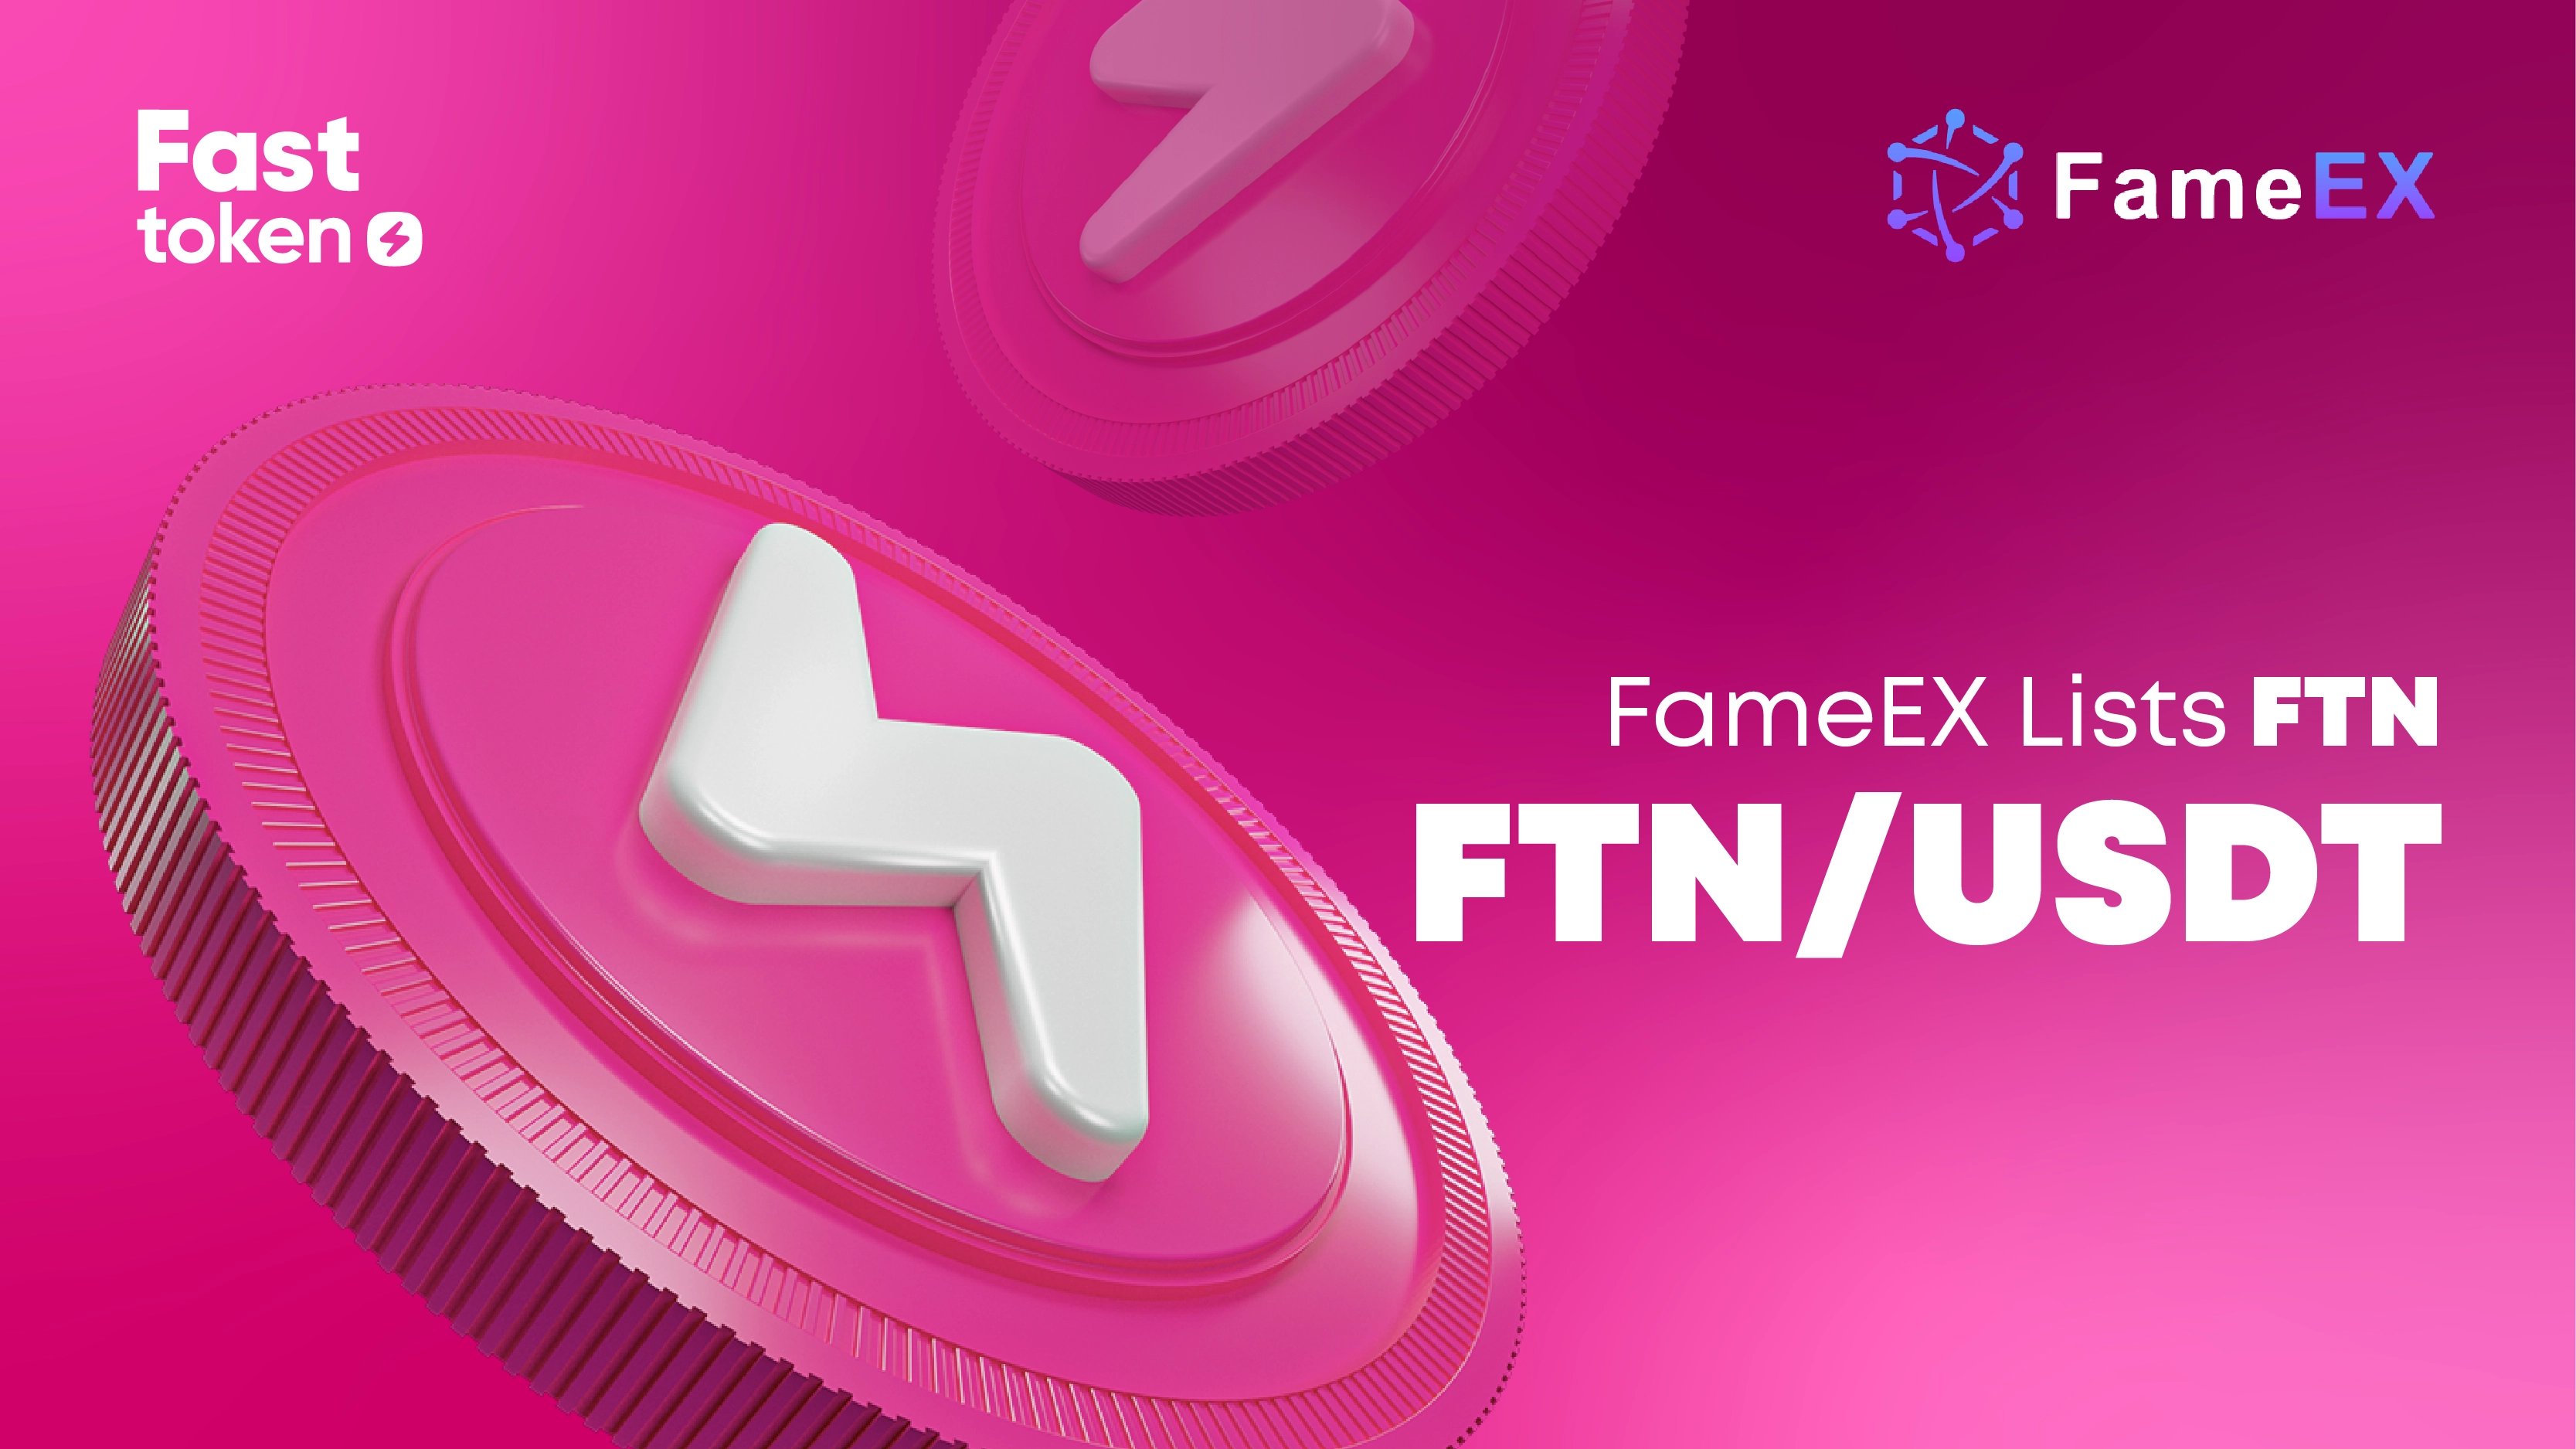 Fasttoken (FTN) Artık FameEX’de Kota Alındı